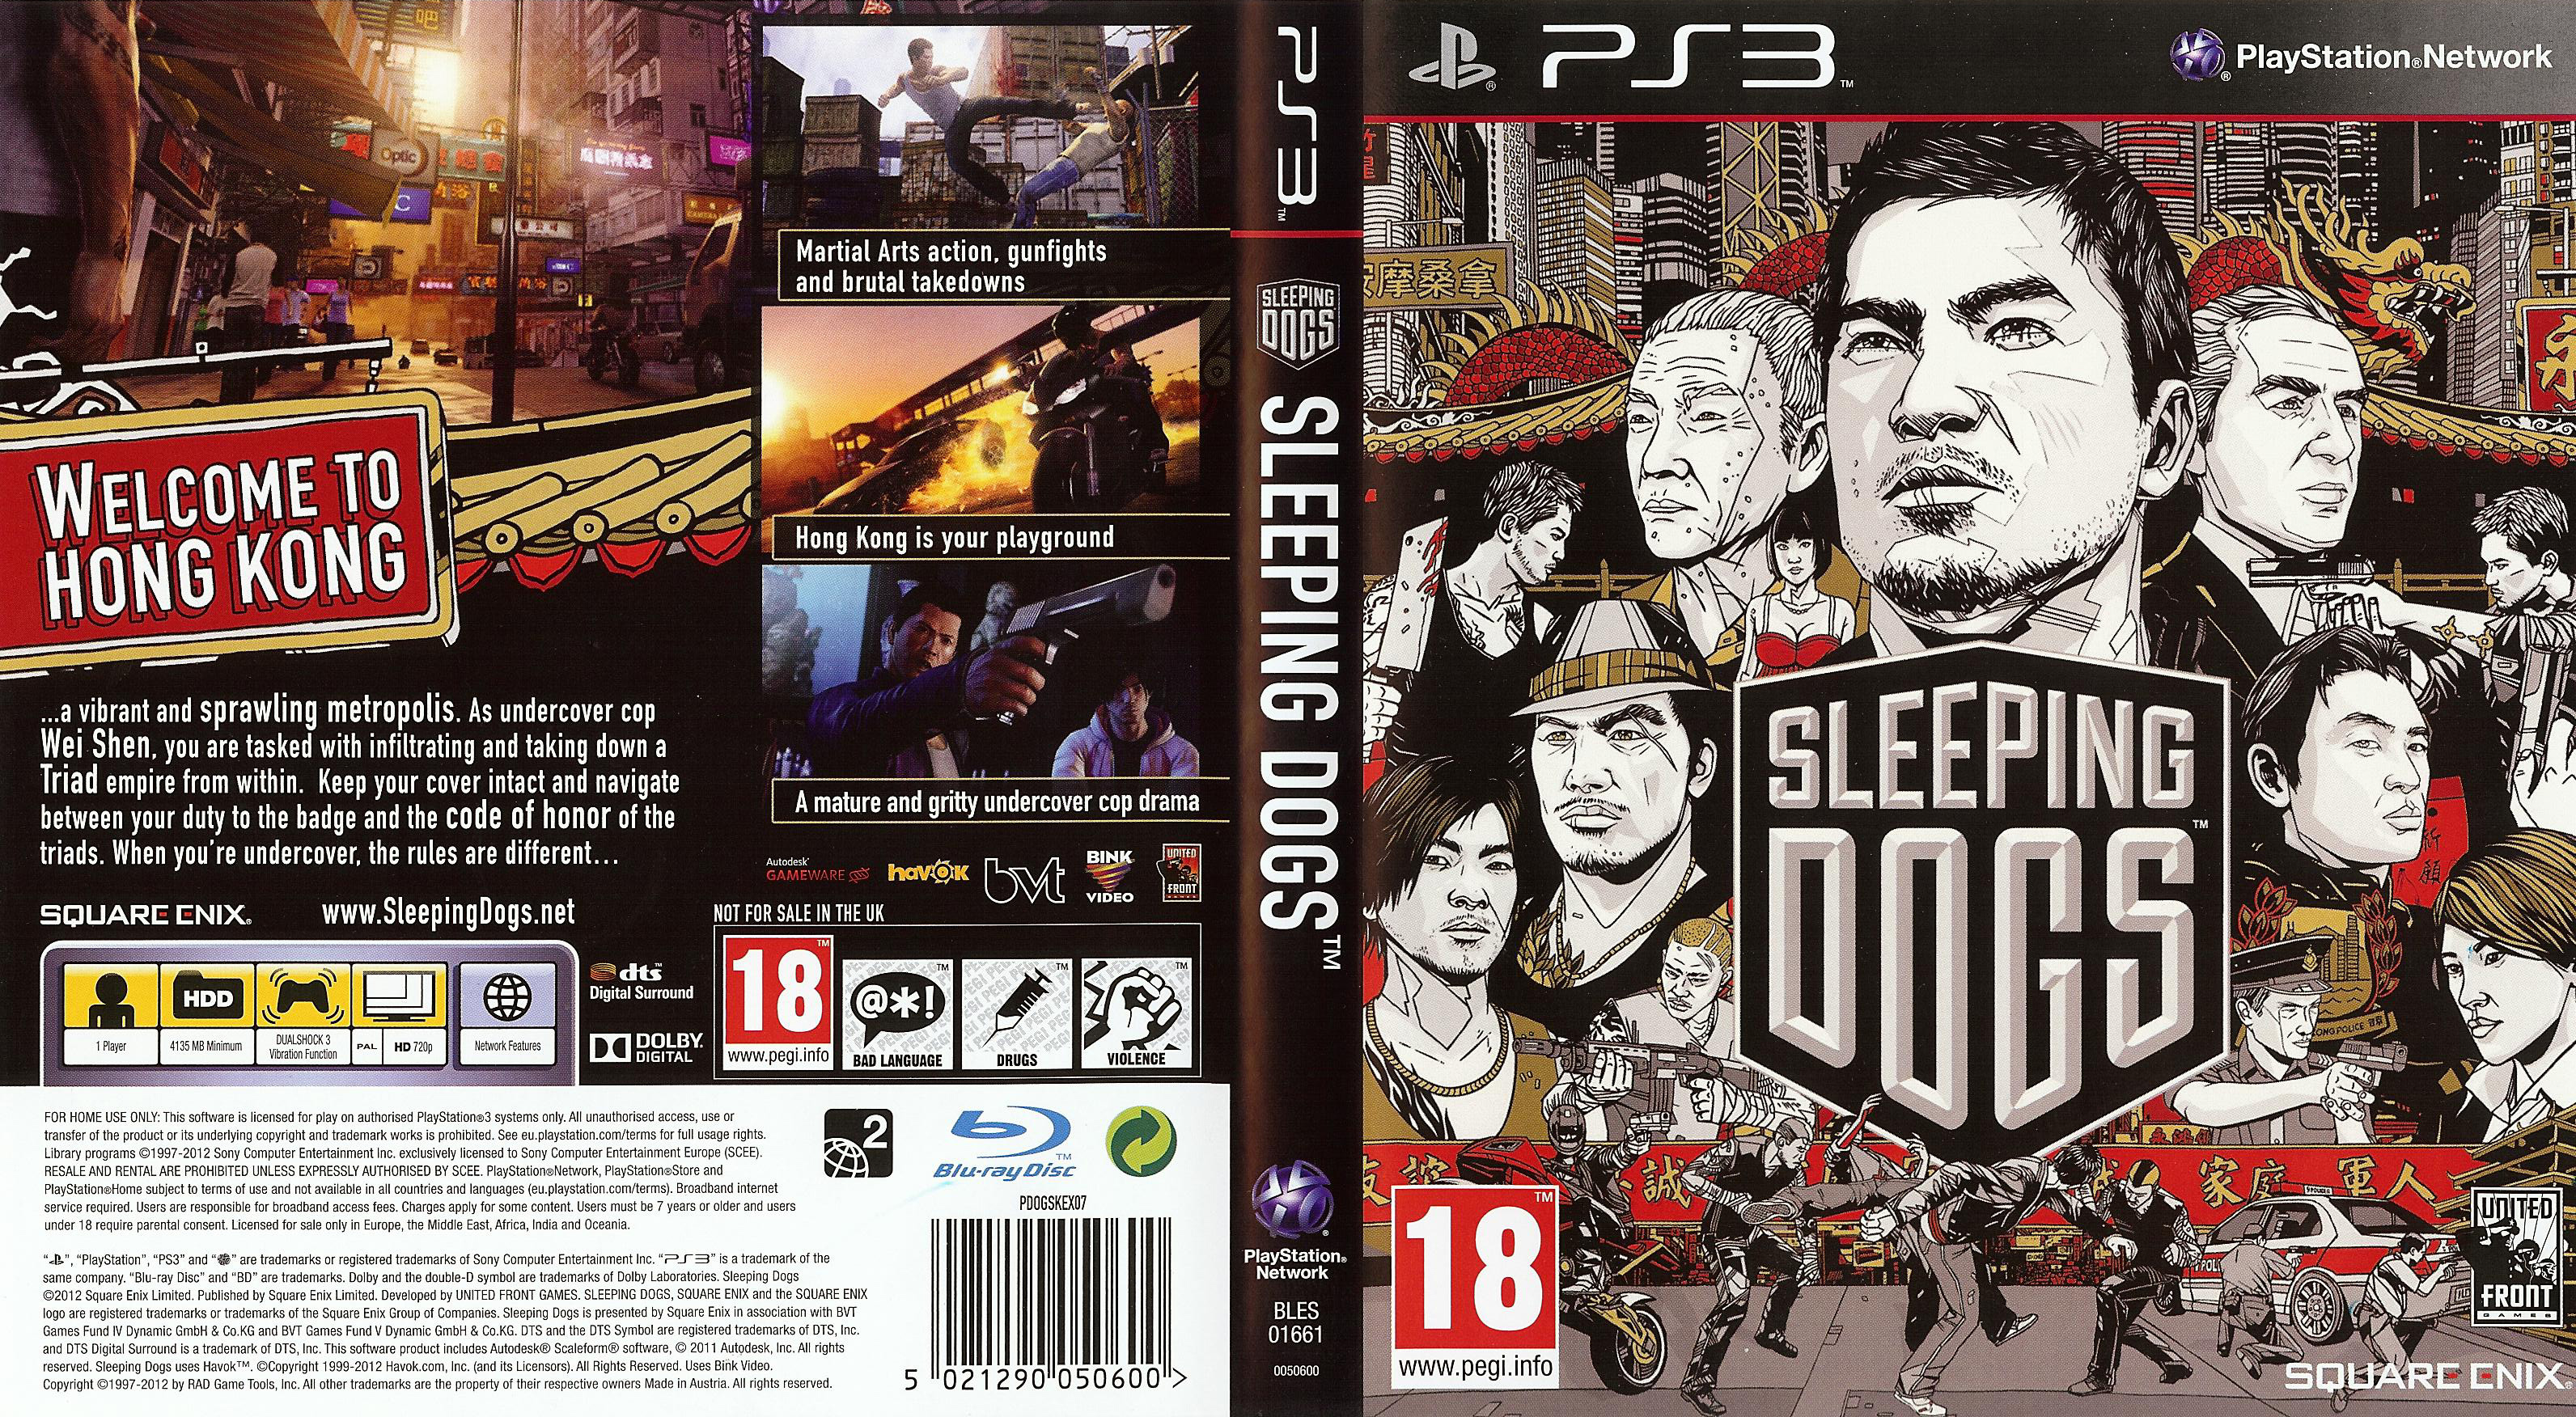 Sleeping Dogs [PS3, английская версия]